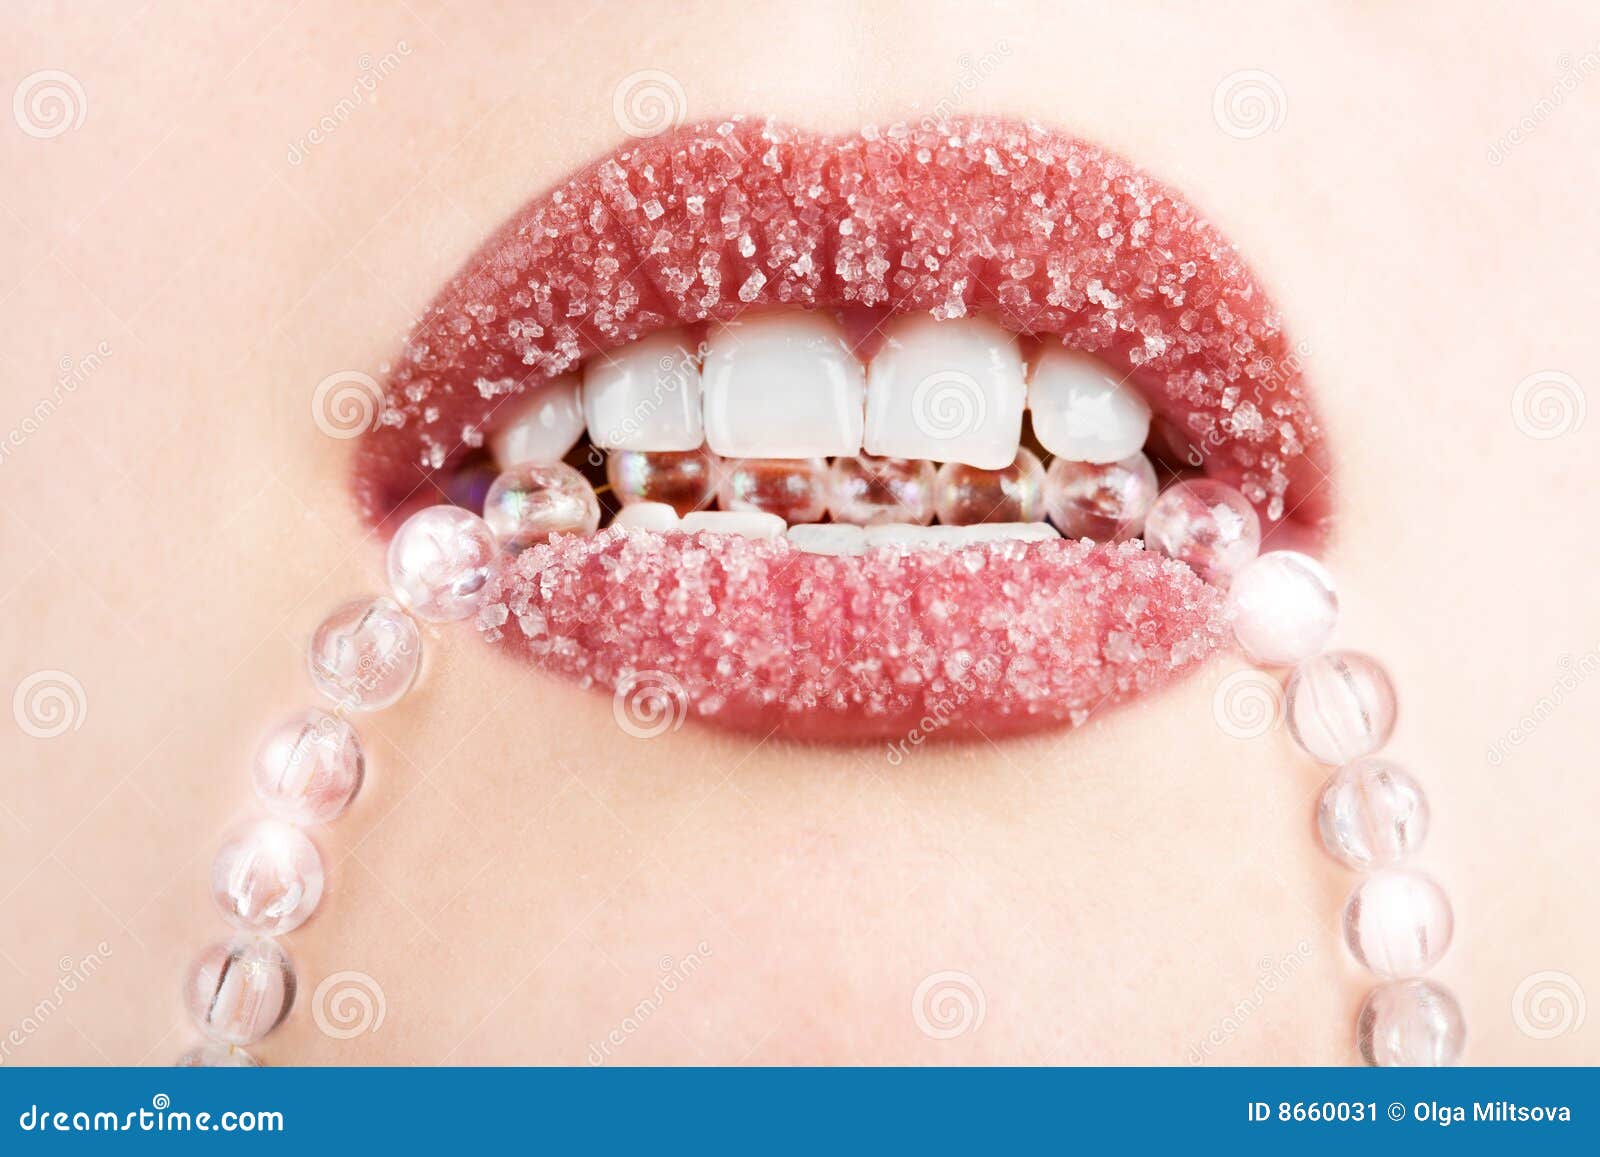 Sweet Lips And White Teeth Stock Image - Image: 8660031